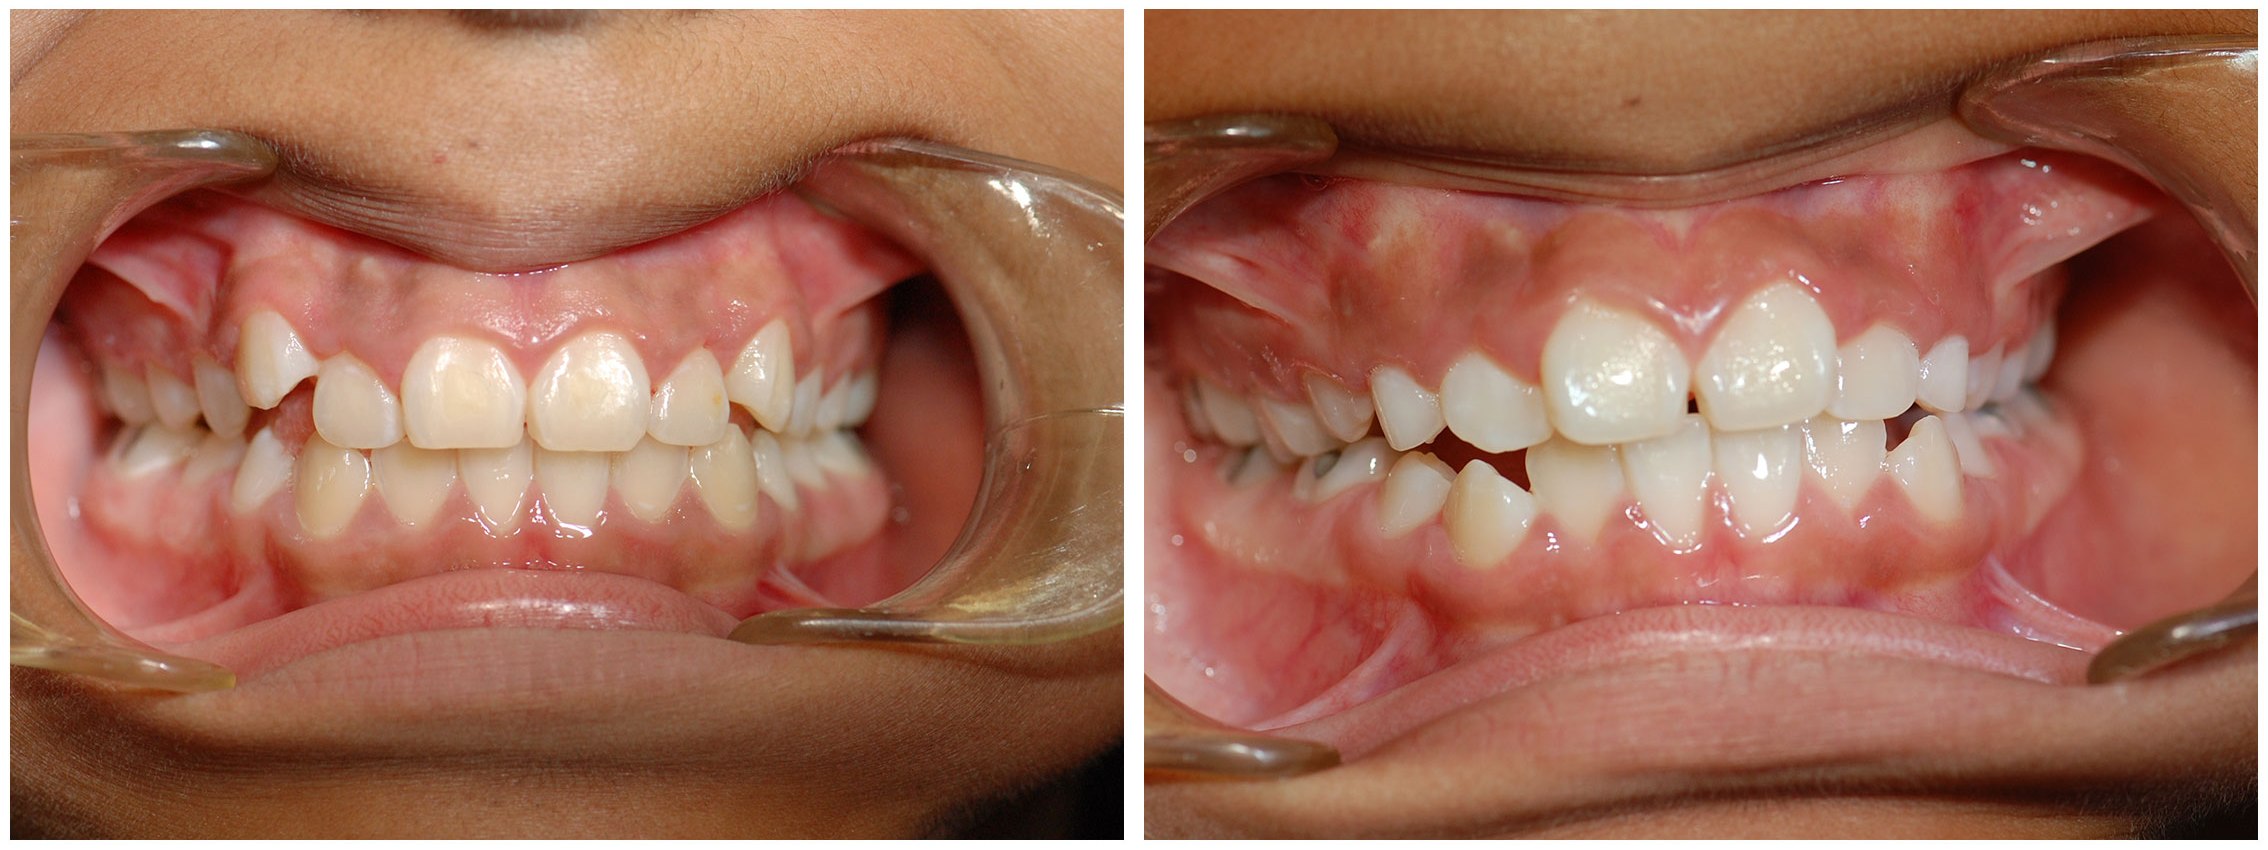 Childrens Dental Braces Before & After